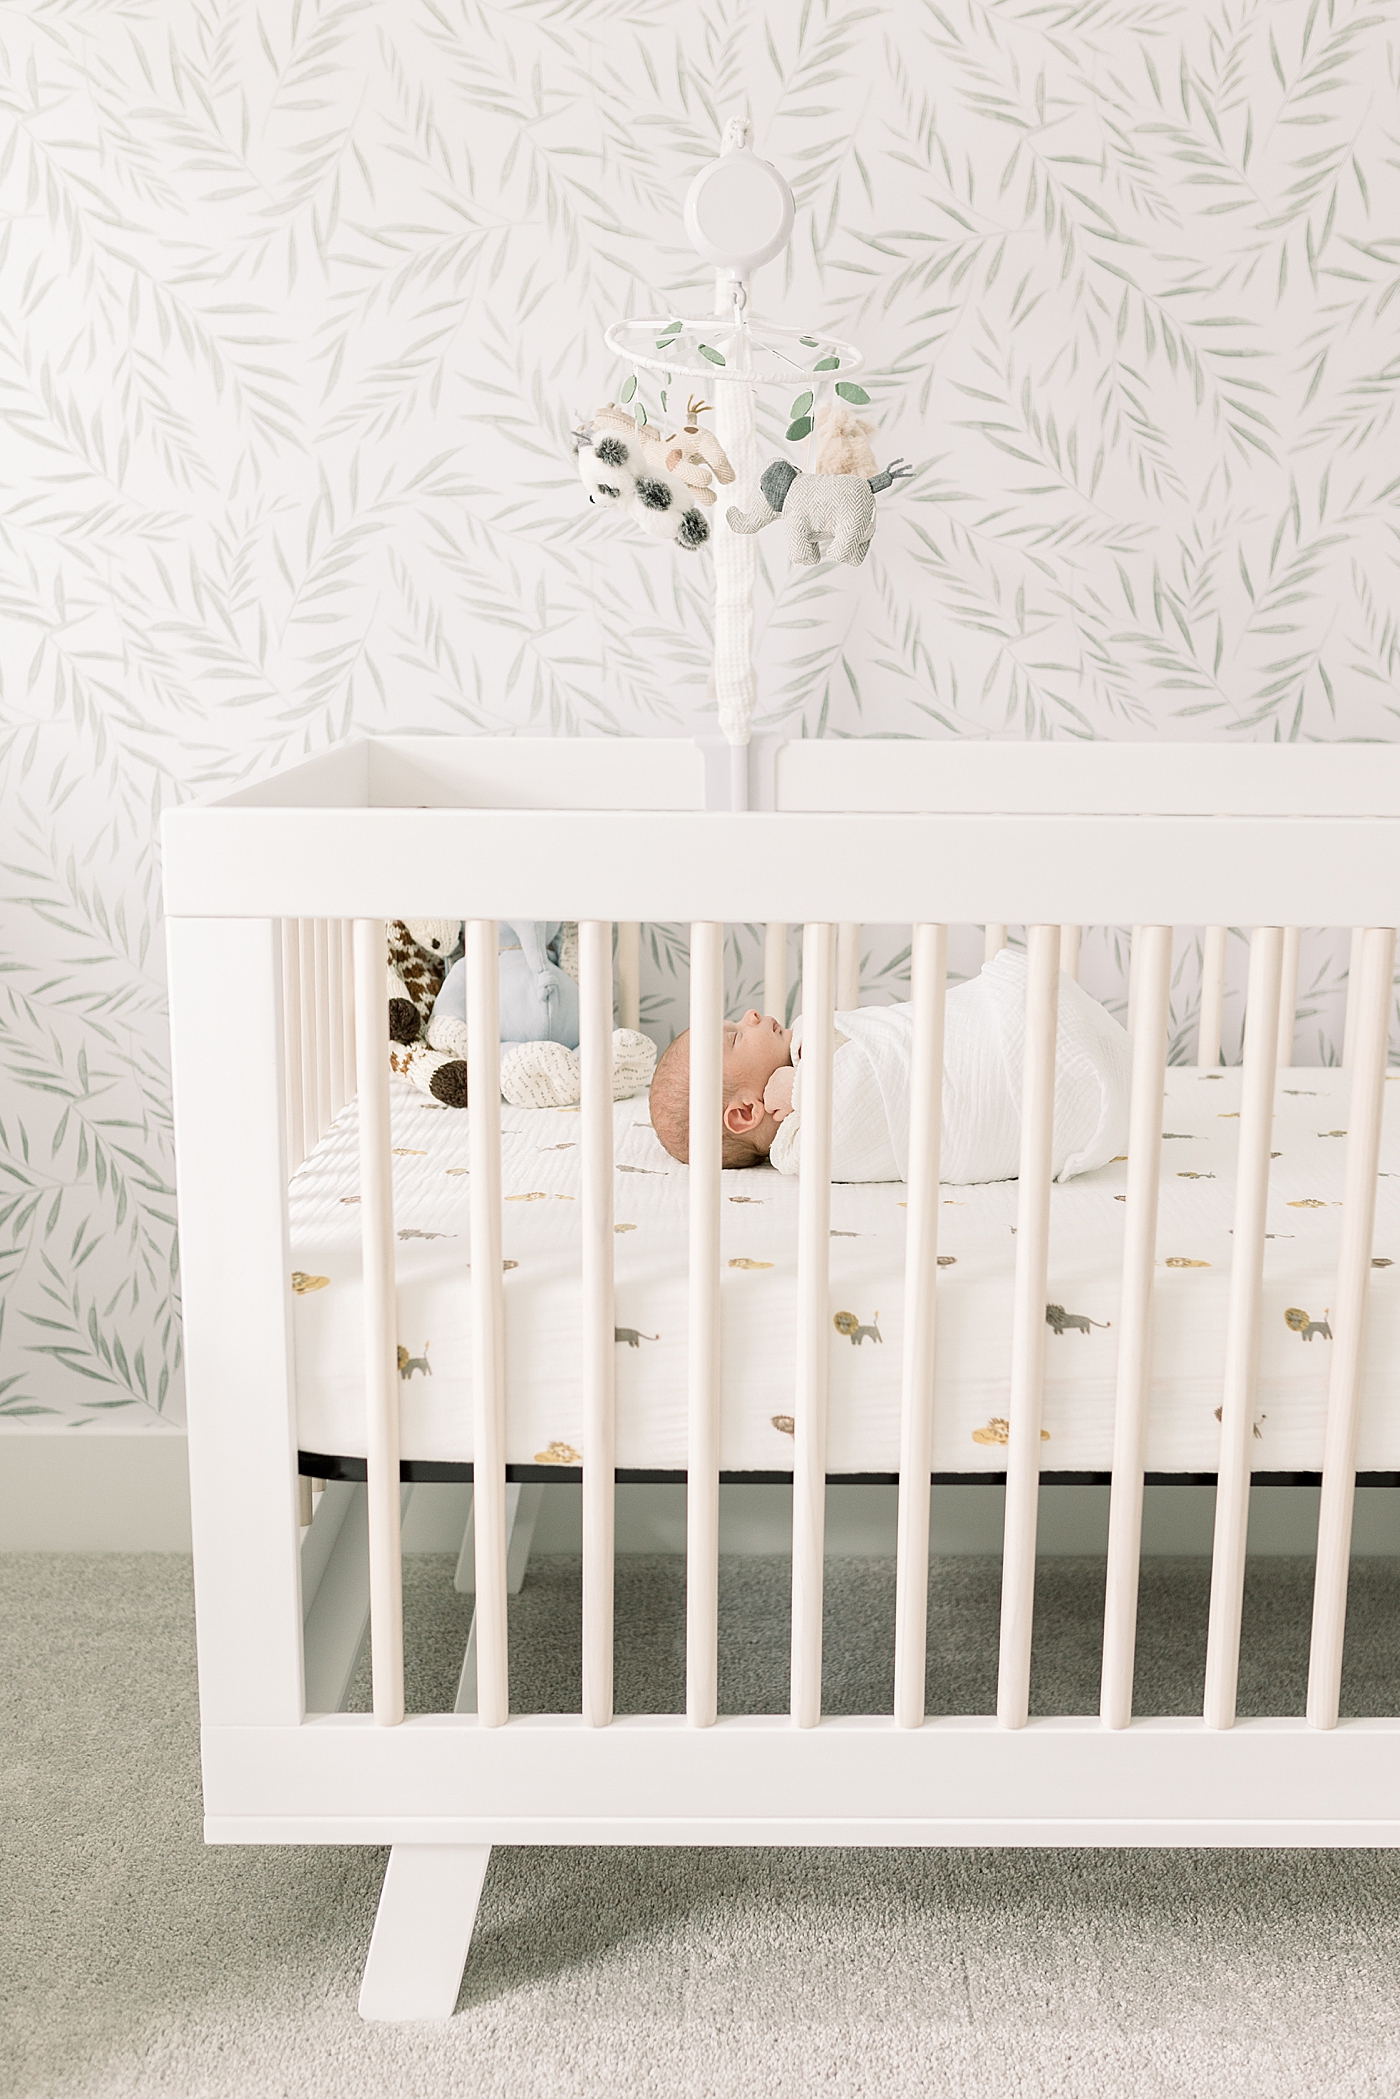 Baby boy sleeping in his white crib | Photo by Caitlyn Motycka Photography